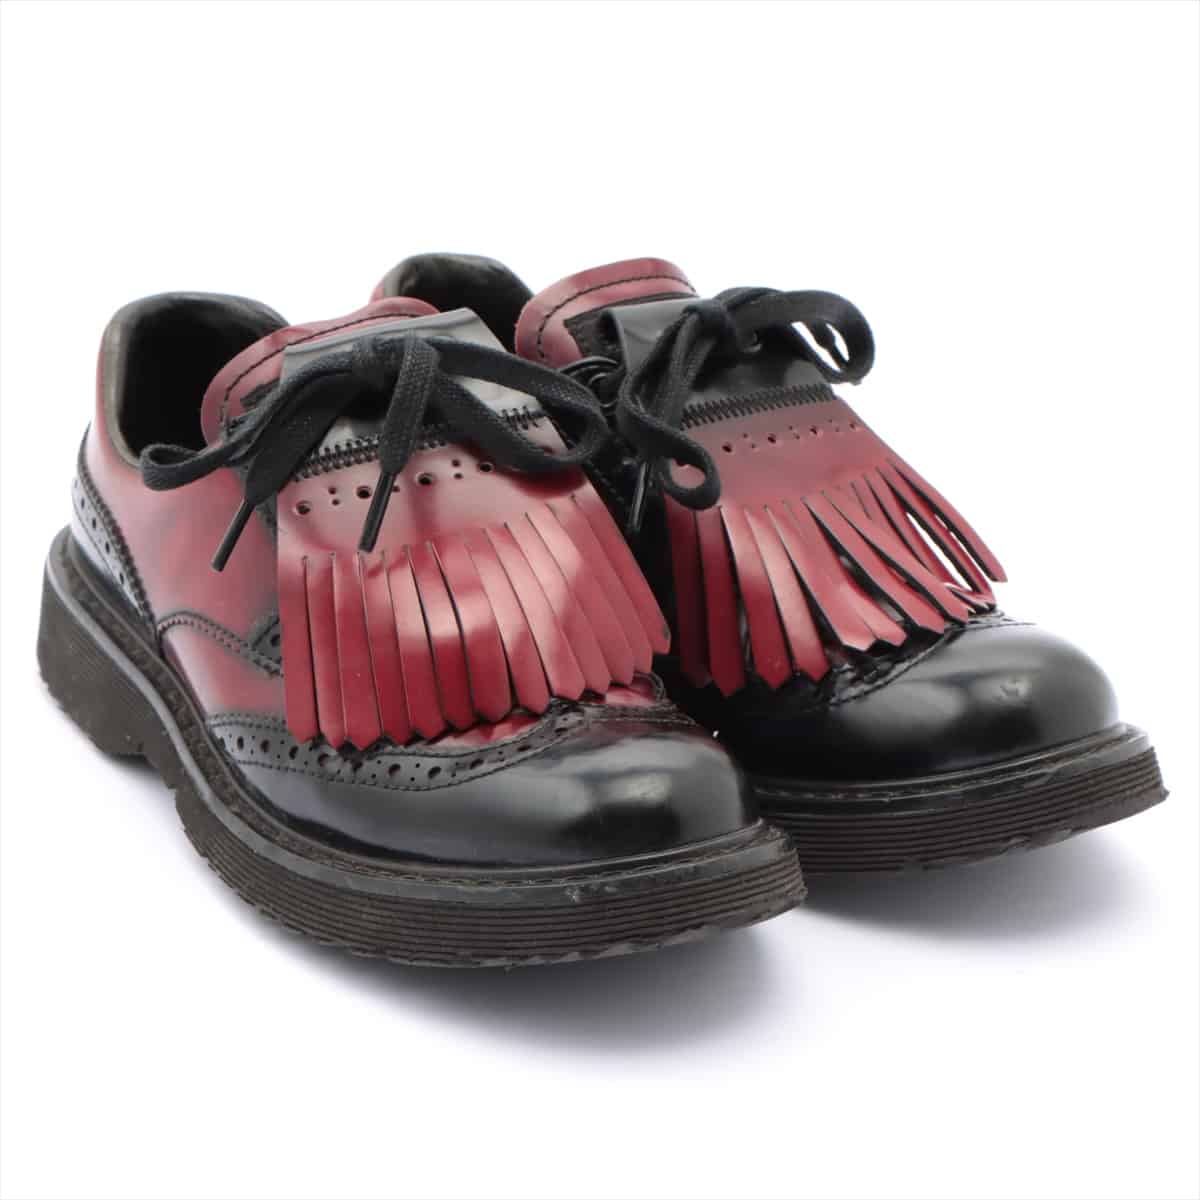 Prada Sport Patent leather Dress shoes 35.5 Ladies' Burgundy